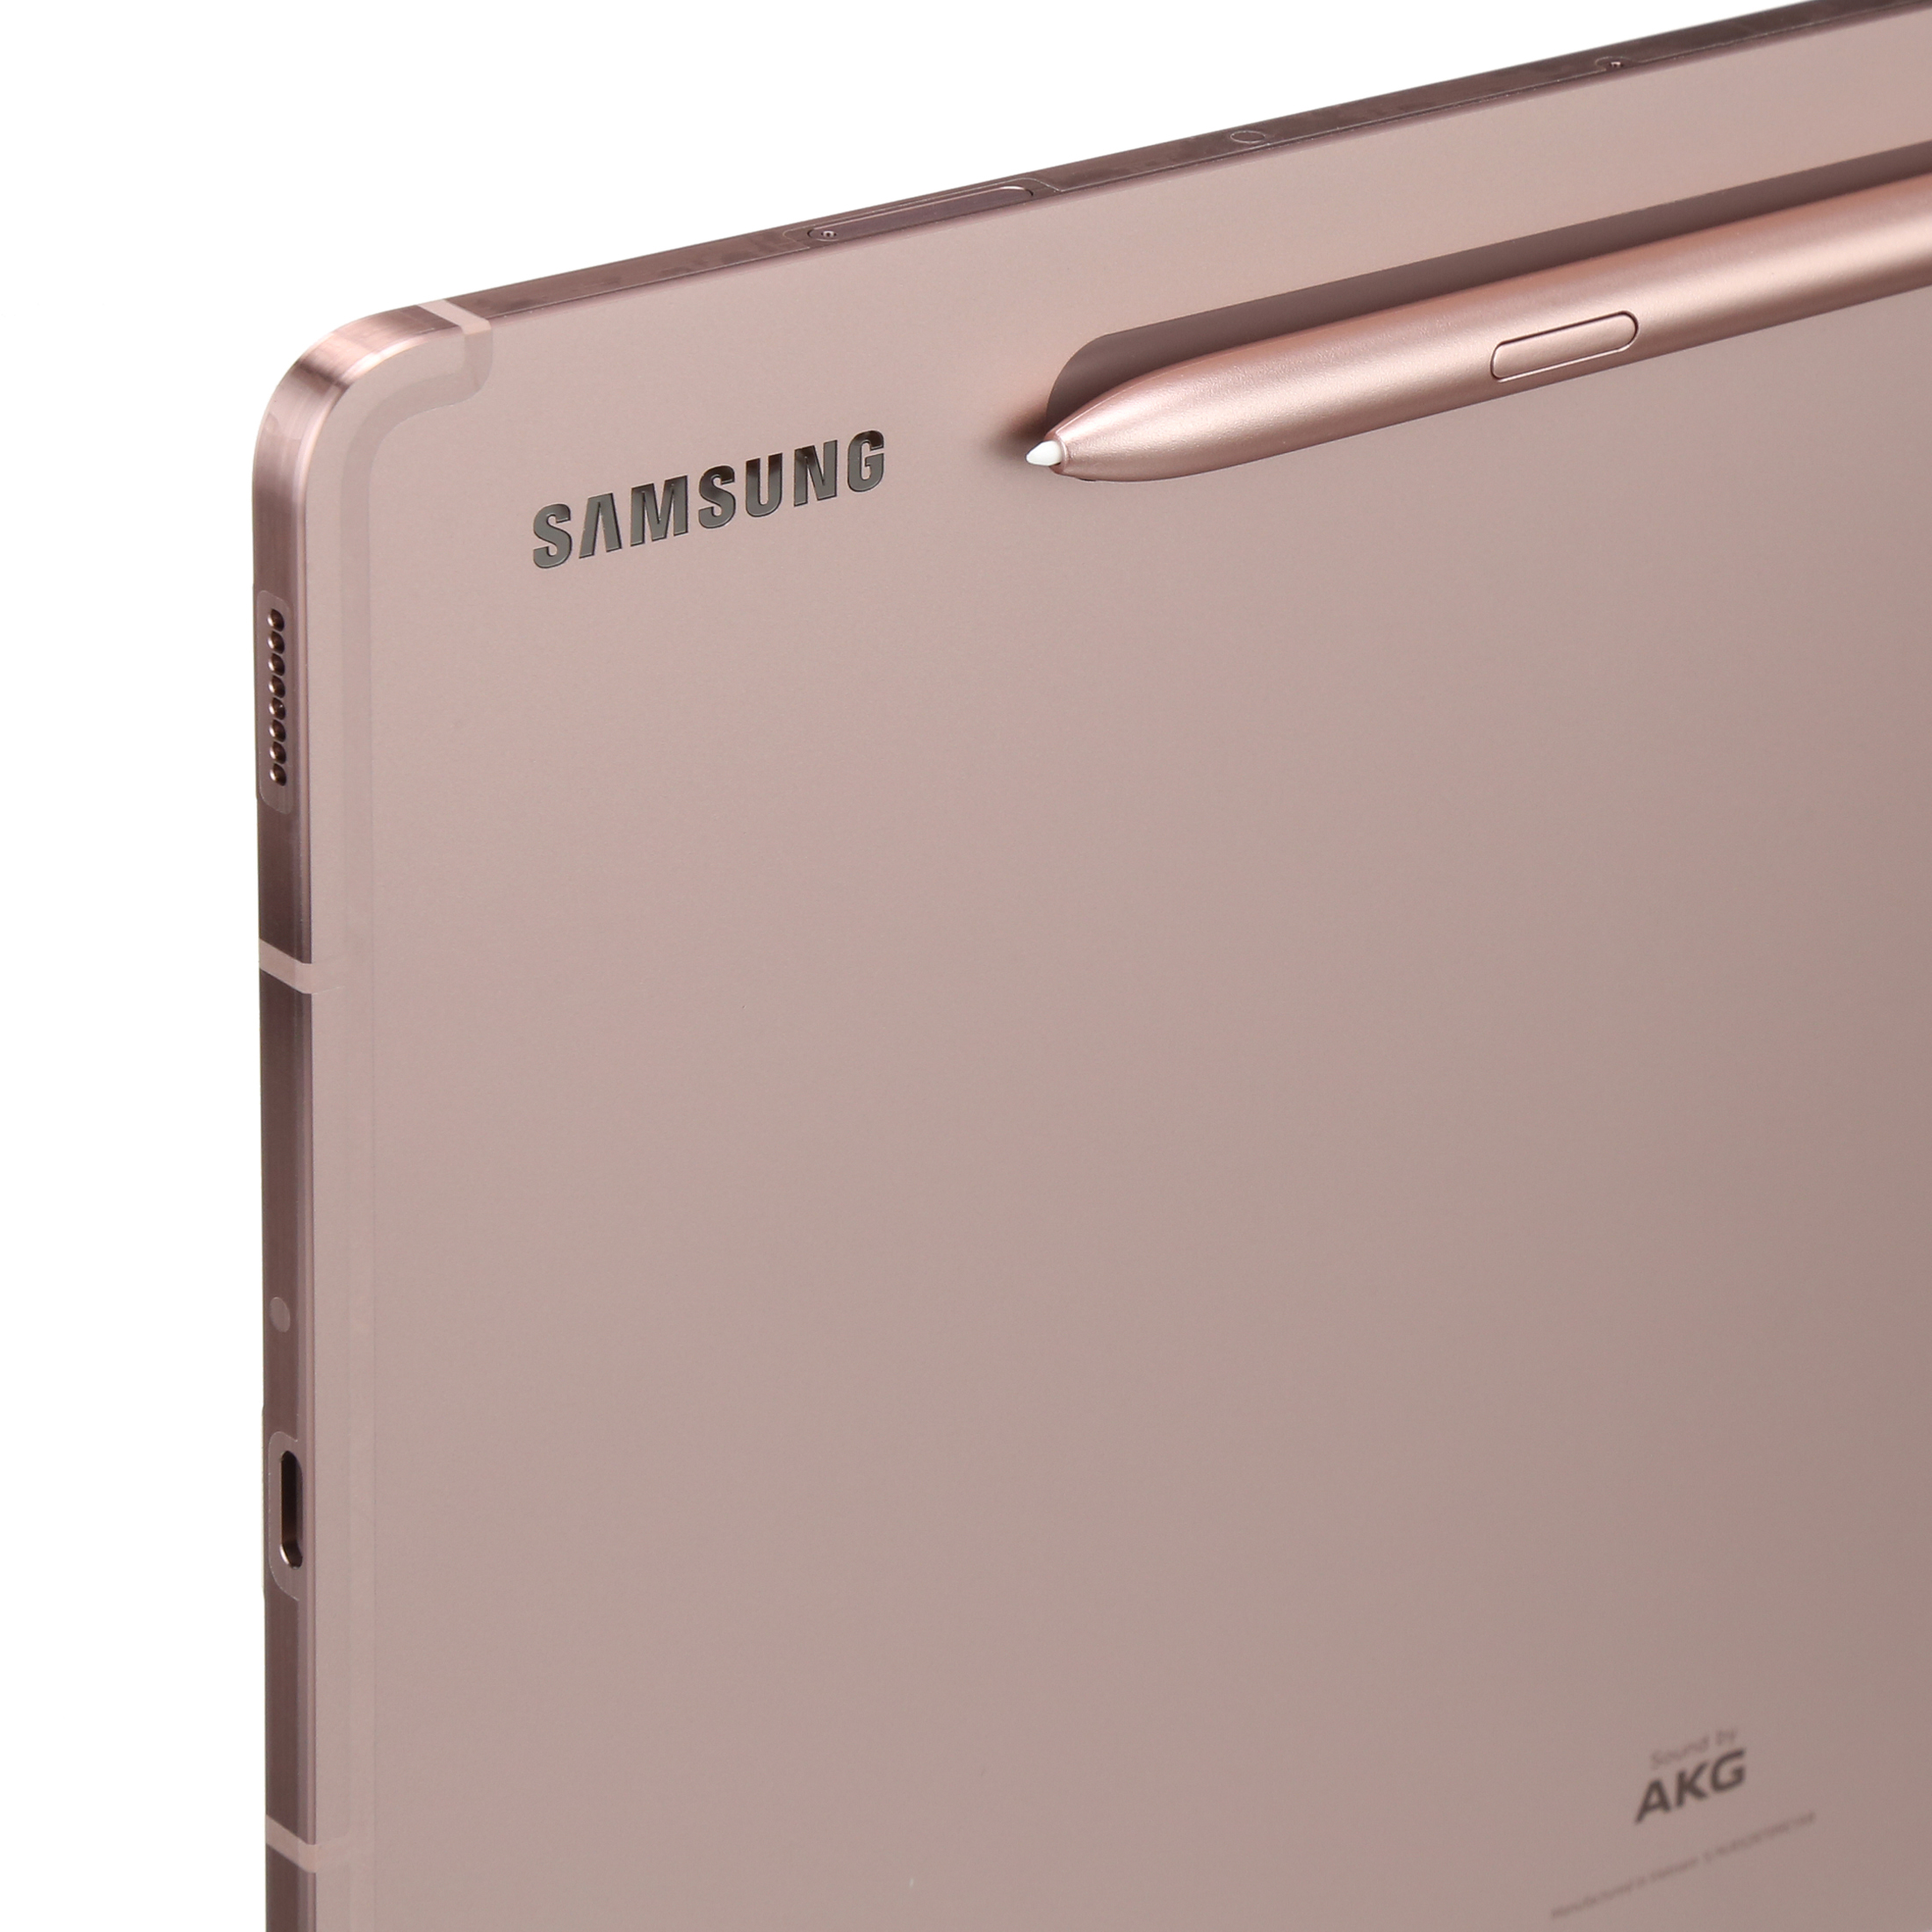 SAMSUNG Galaxy Tab S7 128GB Mystic Bronze (Wi-Fi) S Pen Included - SM-T870NZNAXAR - image 4 of 15